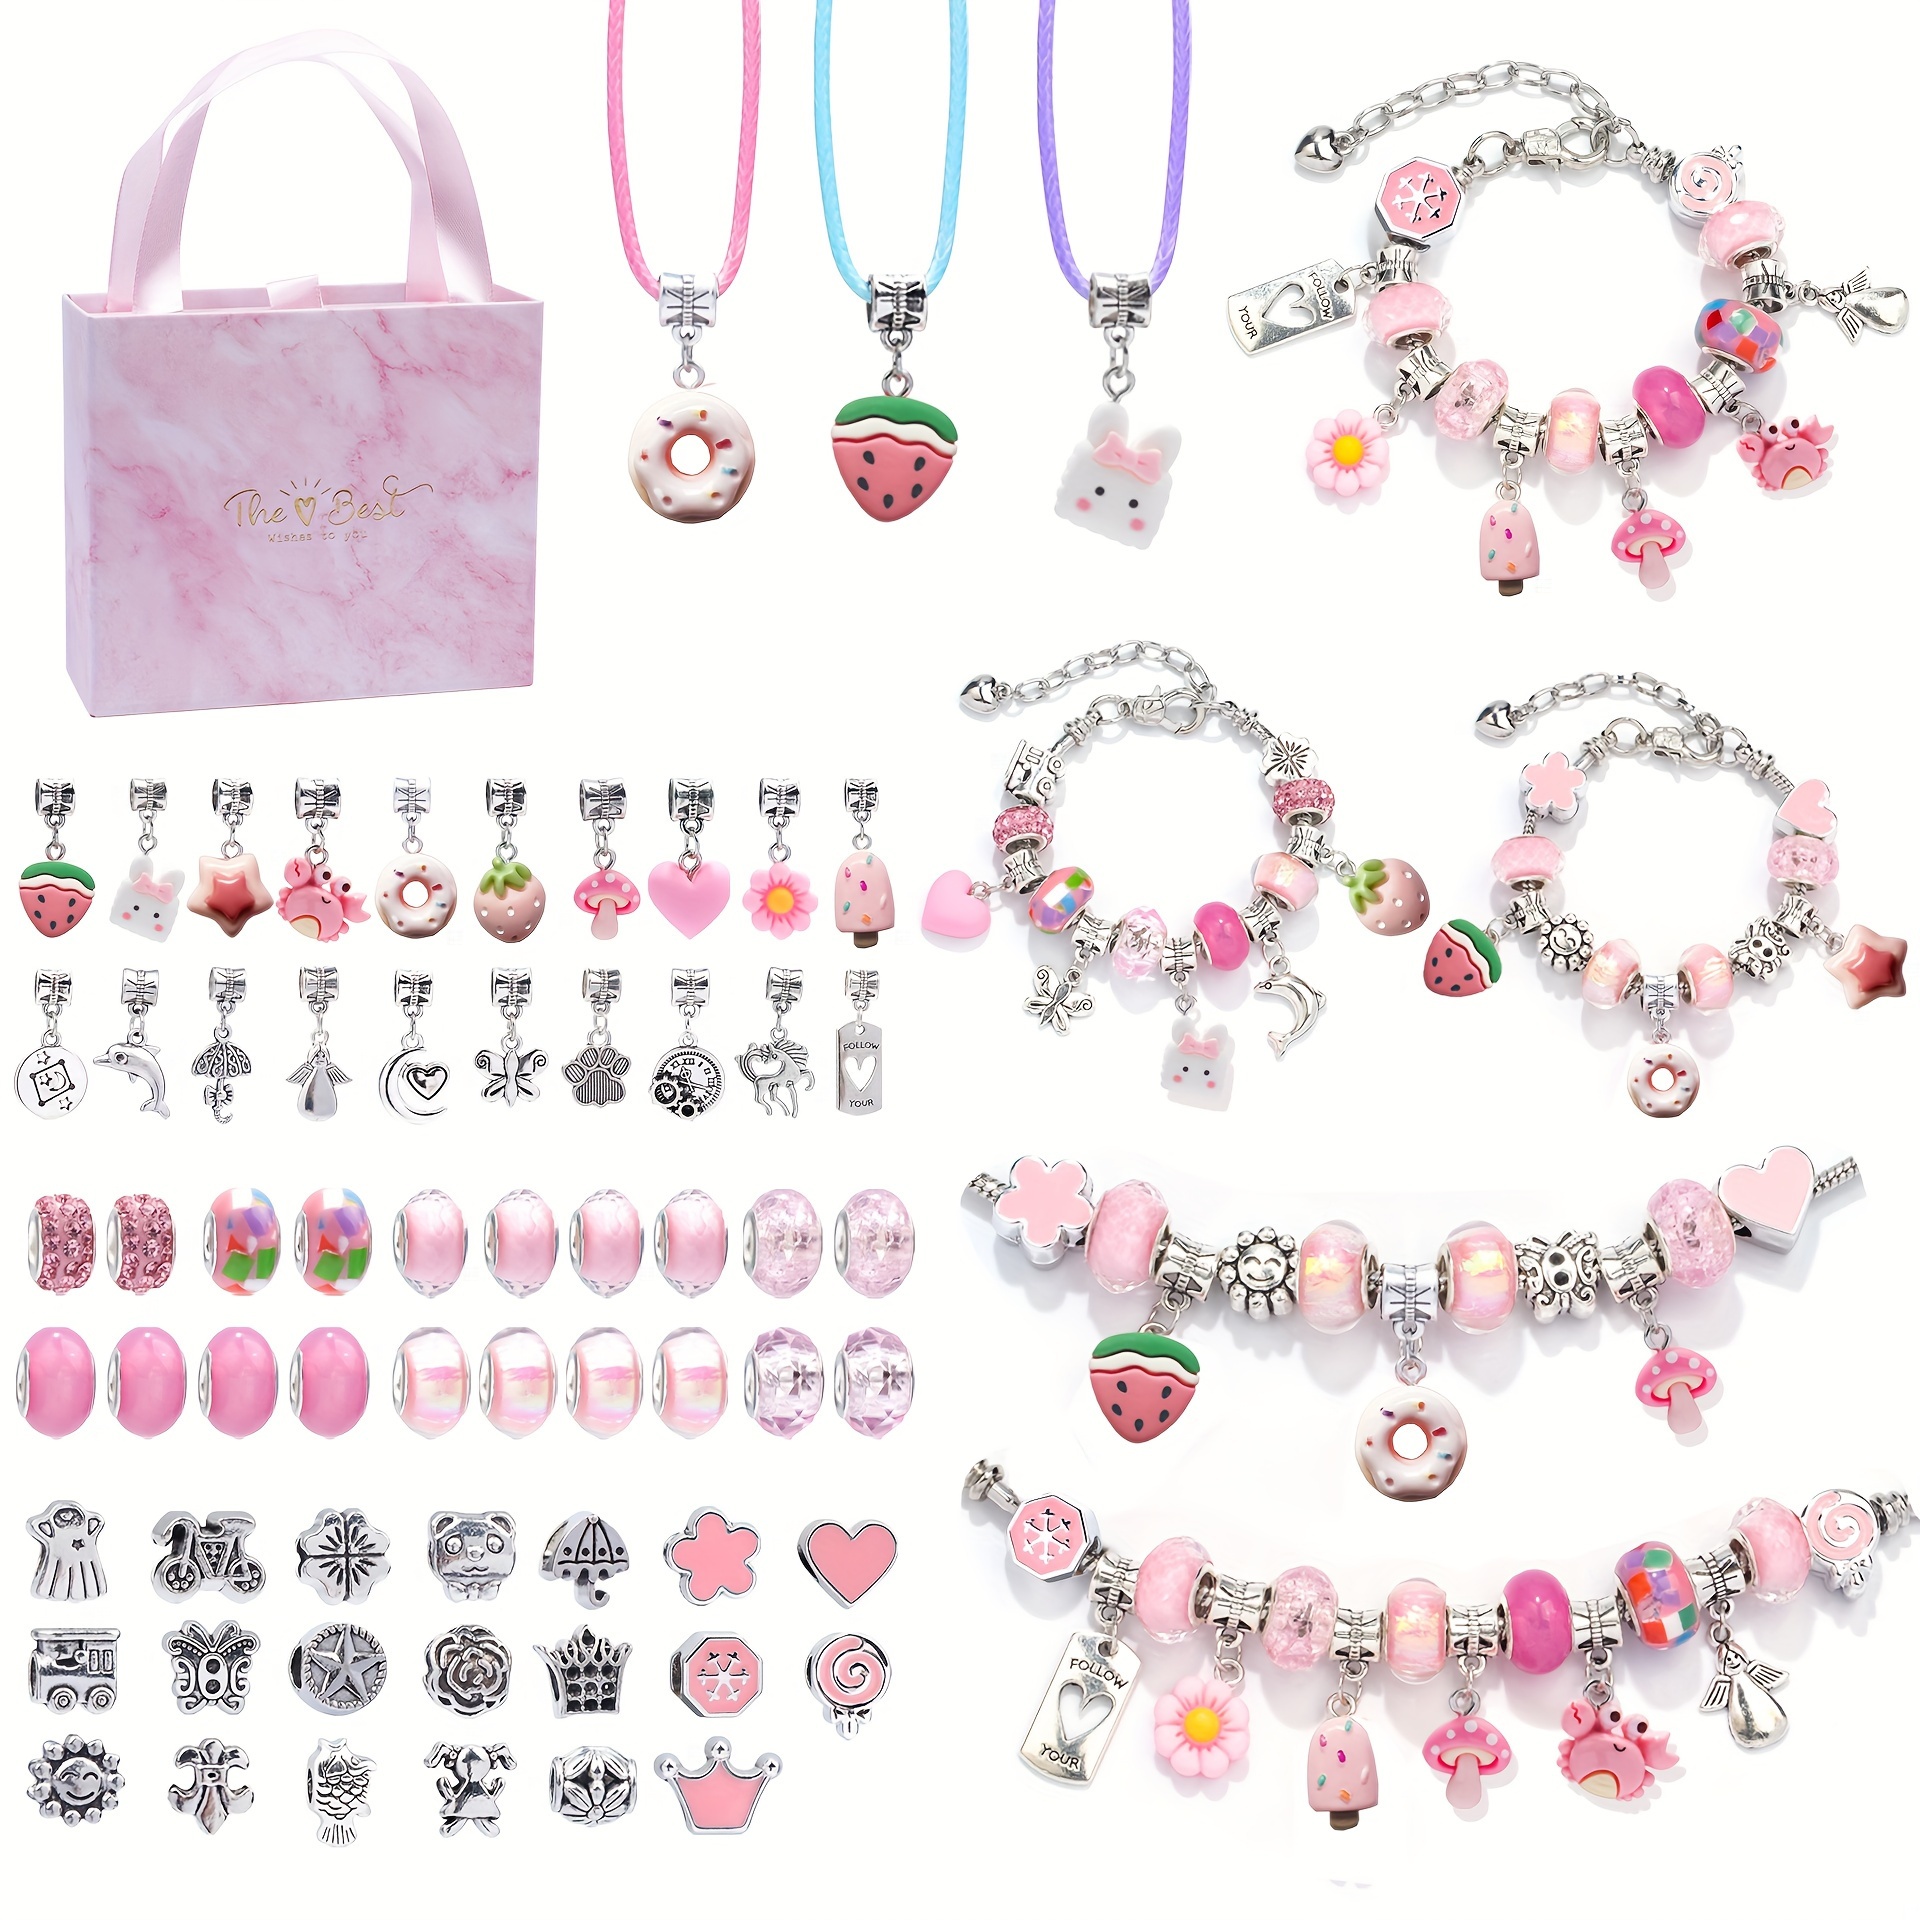 Sharjh Diy Bracelet Making Kit For Girls 96pcs Charm Bracelets Kit With Beads Pendant Charms Bracelets Necklace String